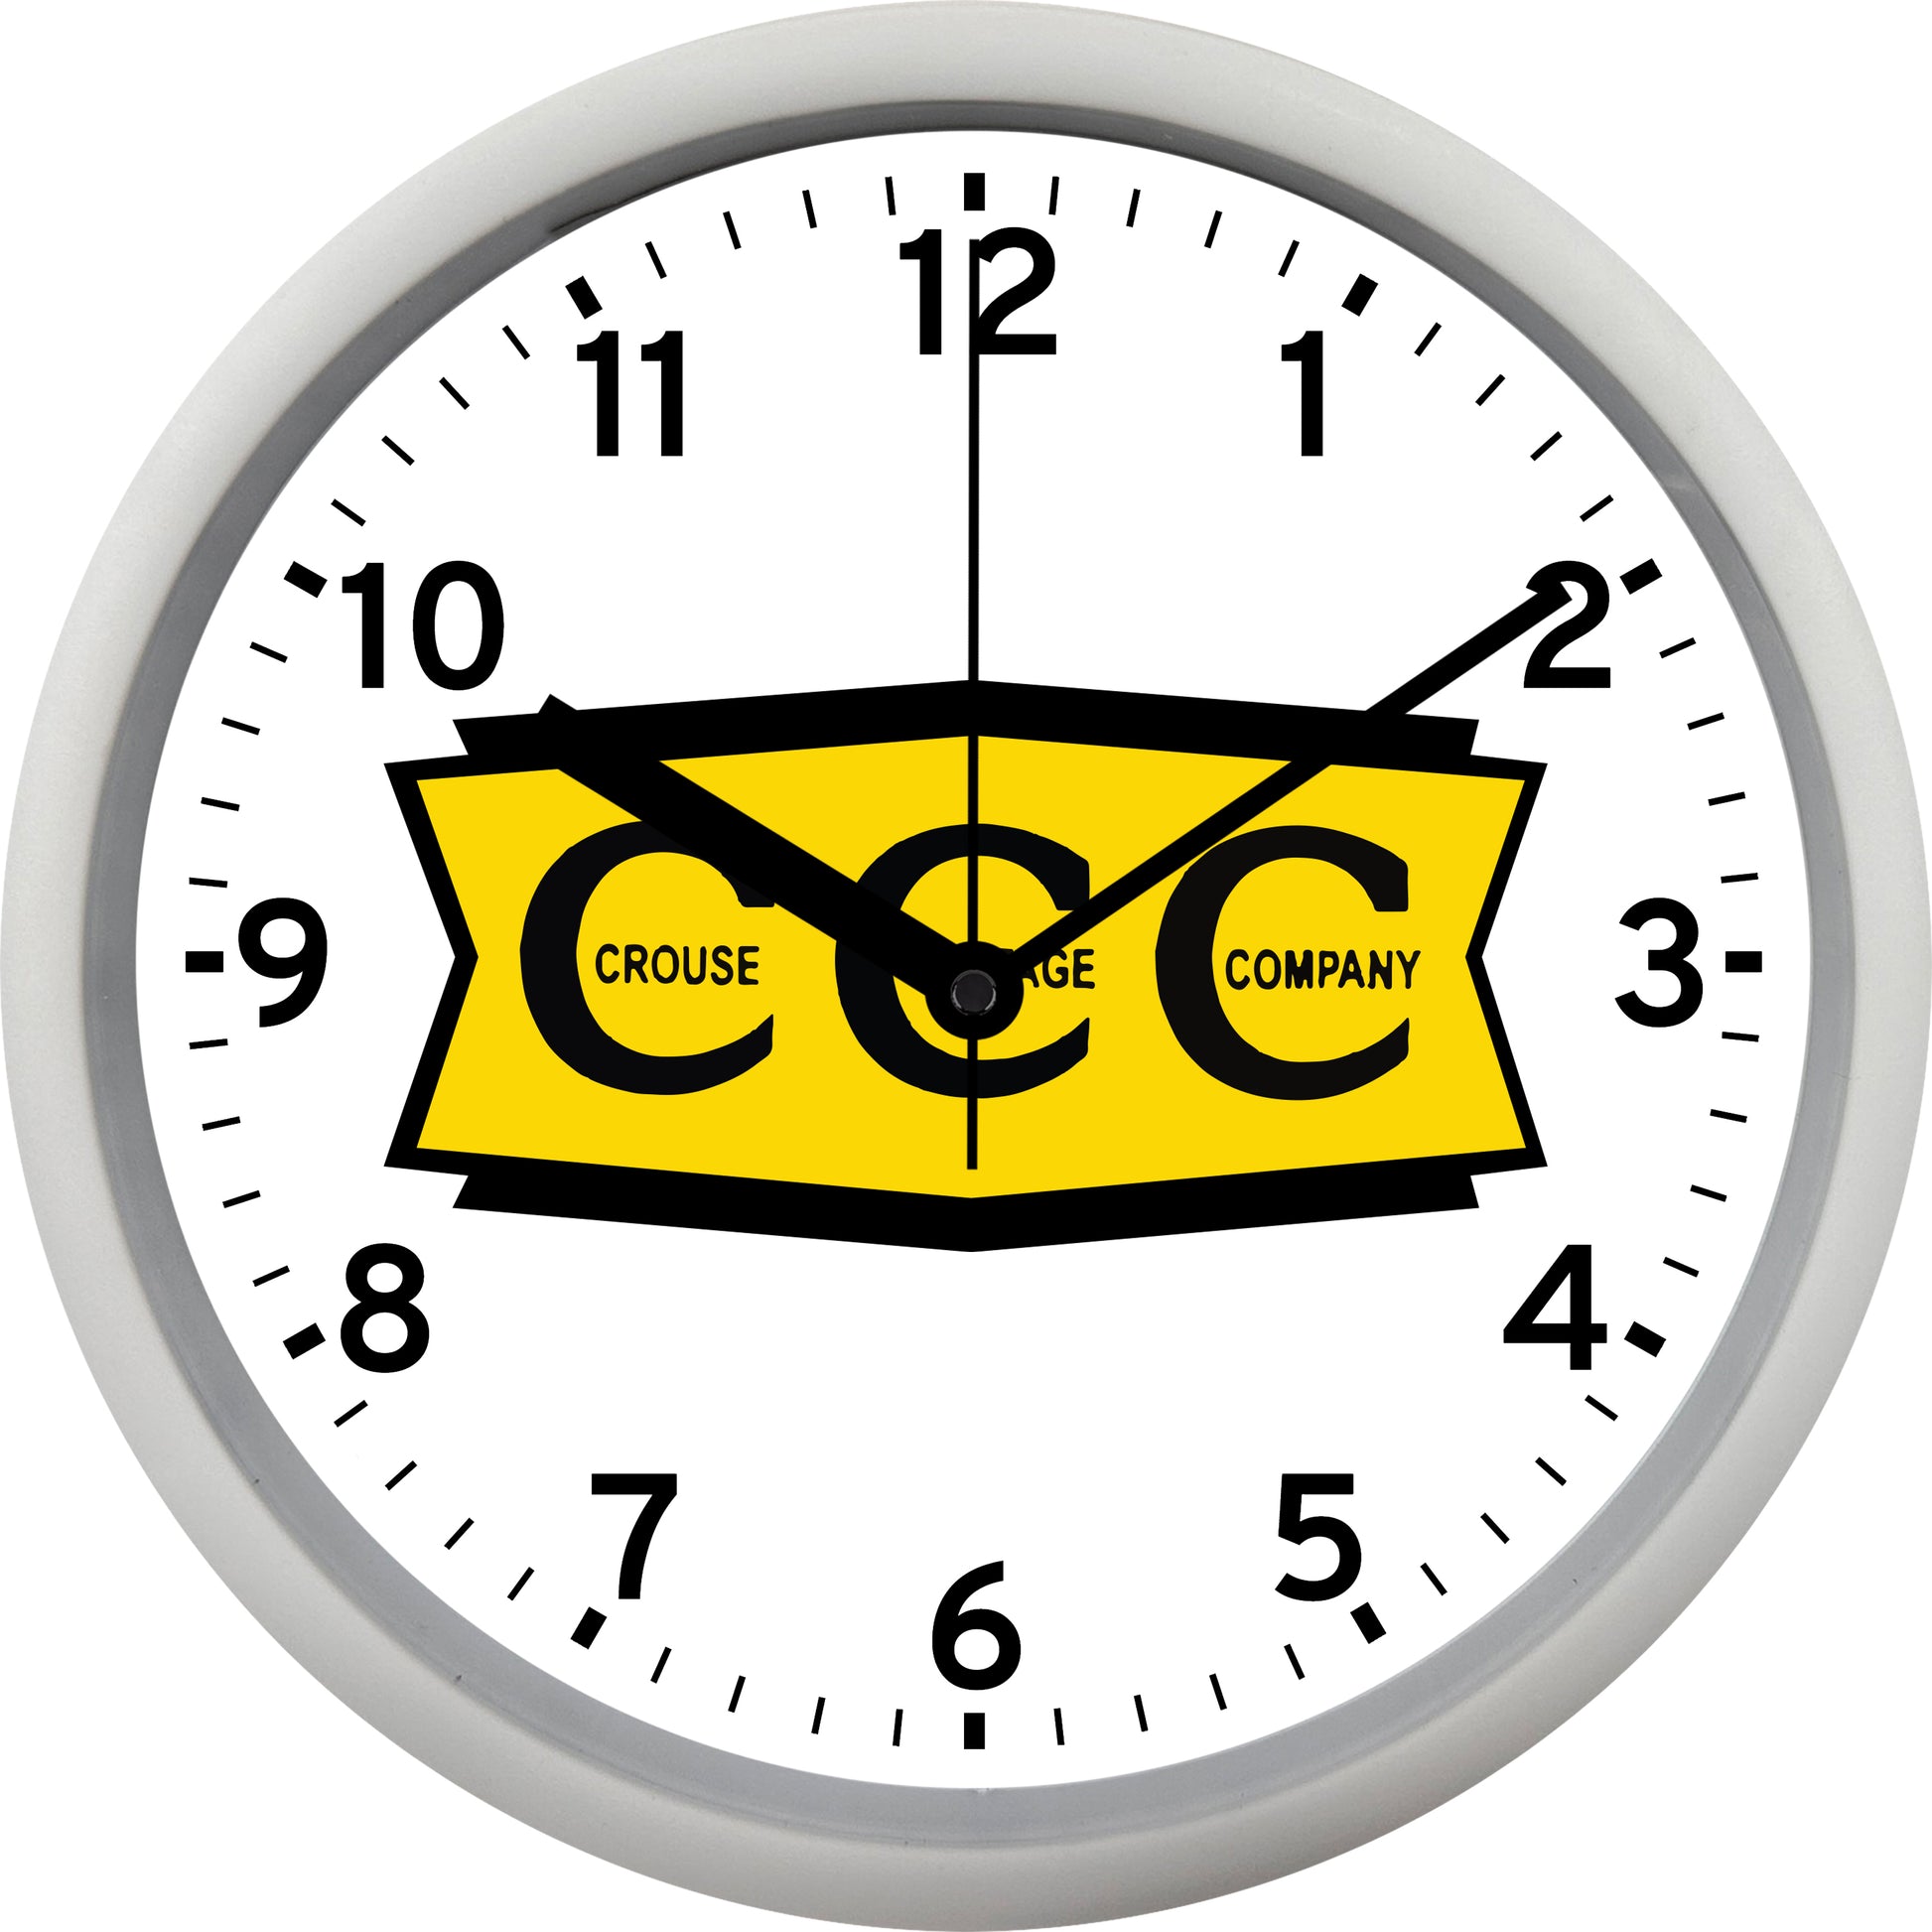 Crouse Cartage Company - "CCC" Wall Clock